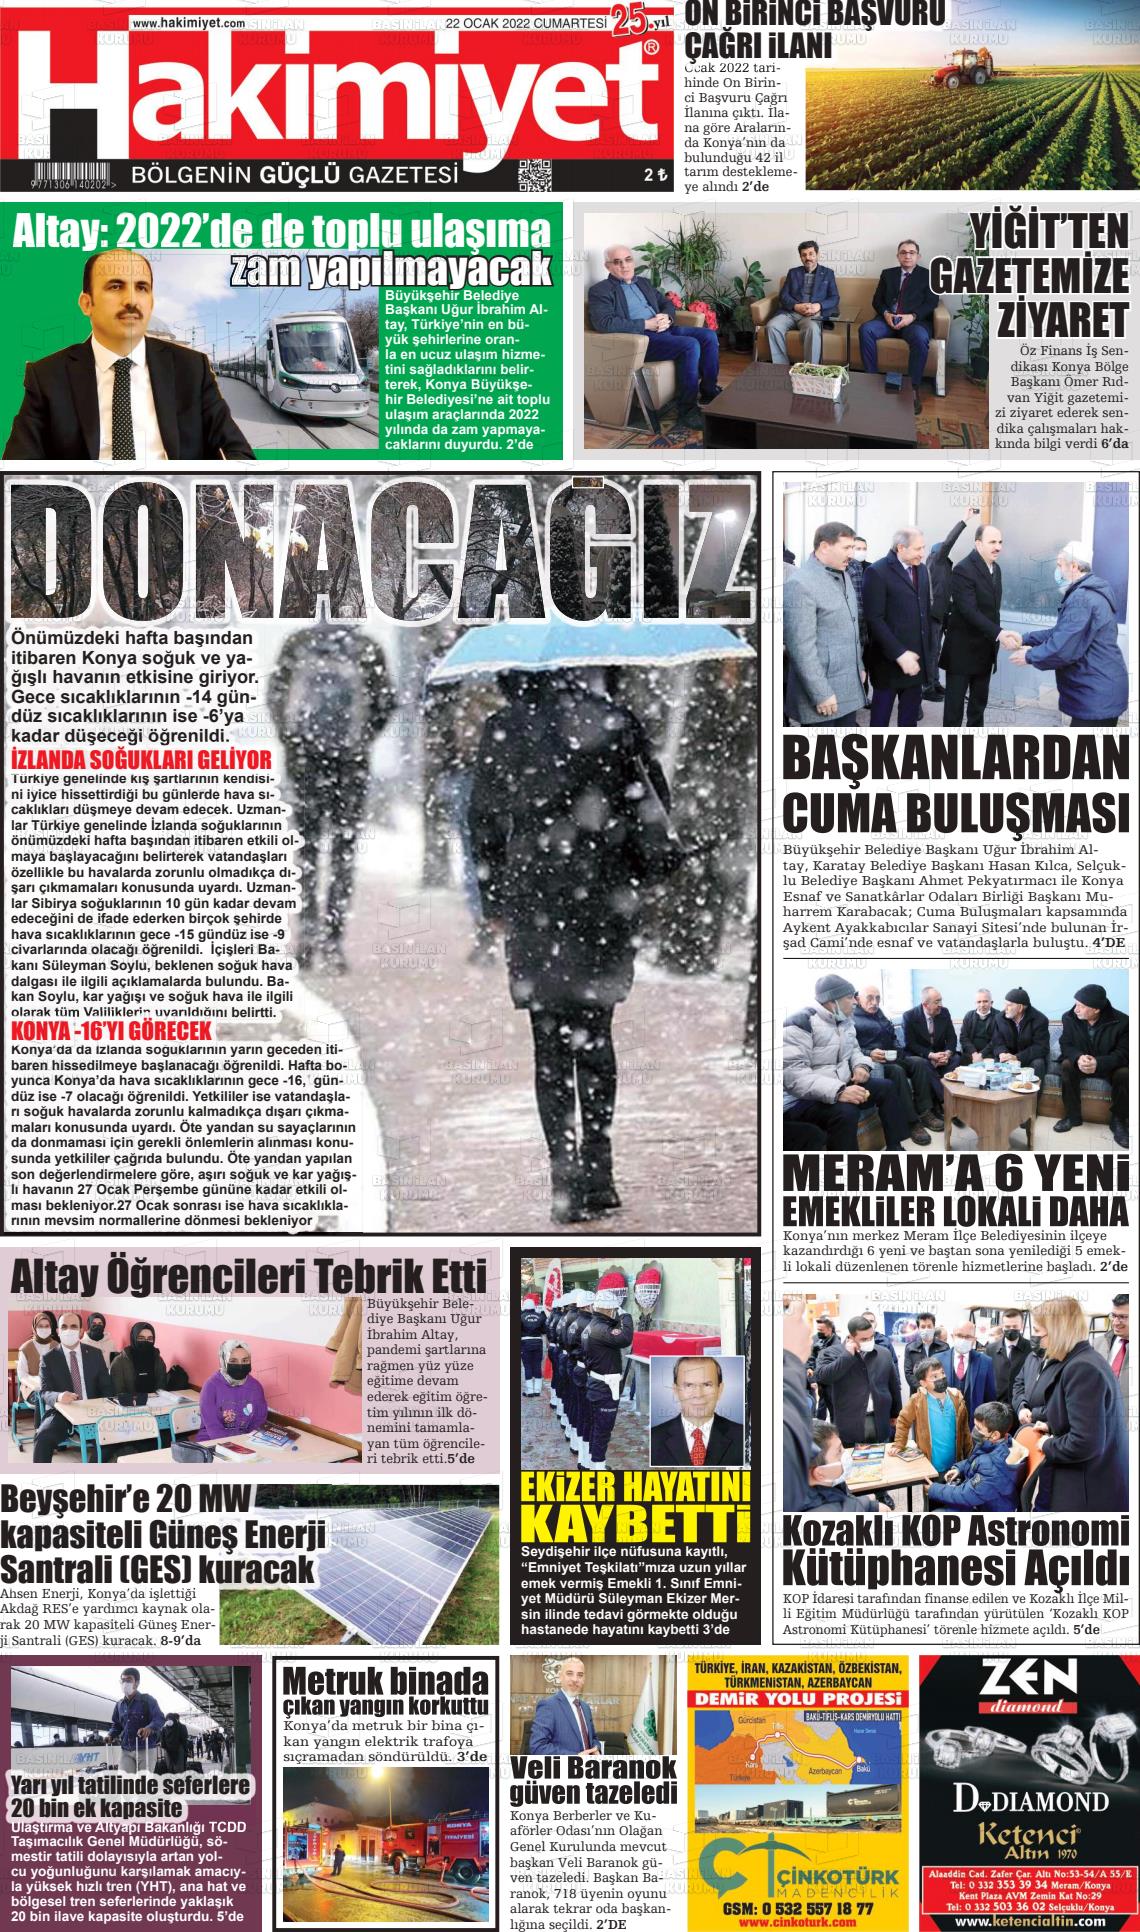 22 Ocak 2022 Konya Hakimiyet Gazete Manşeti